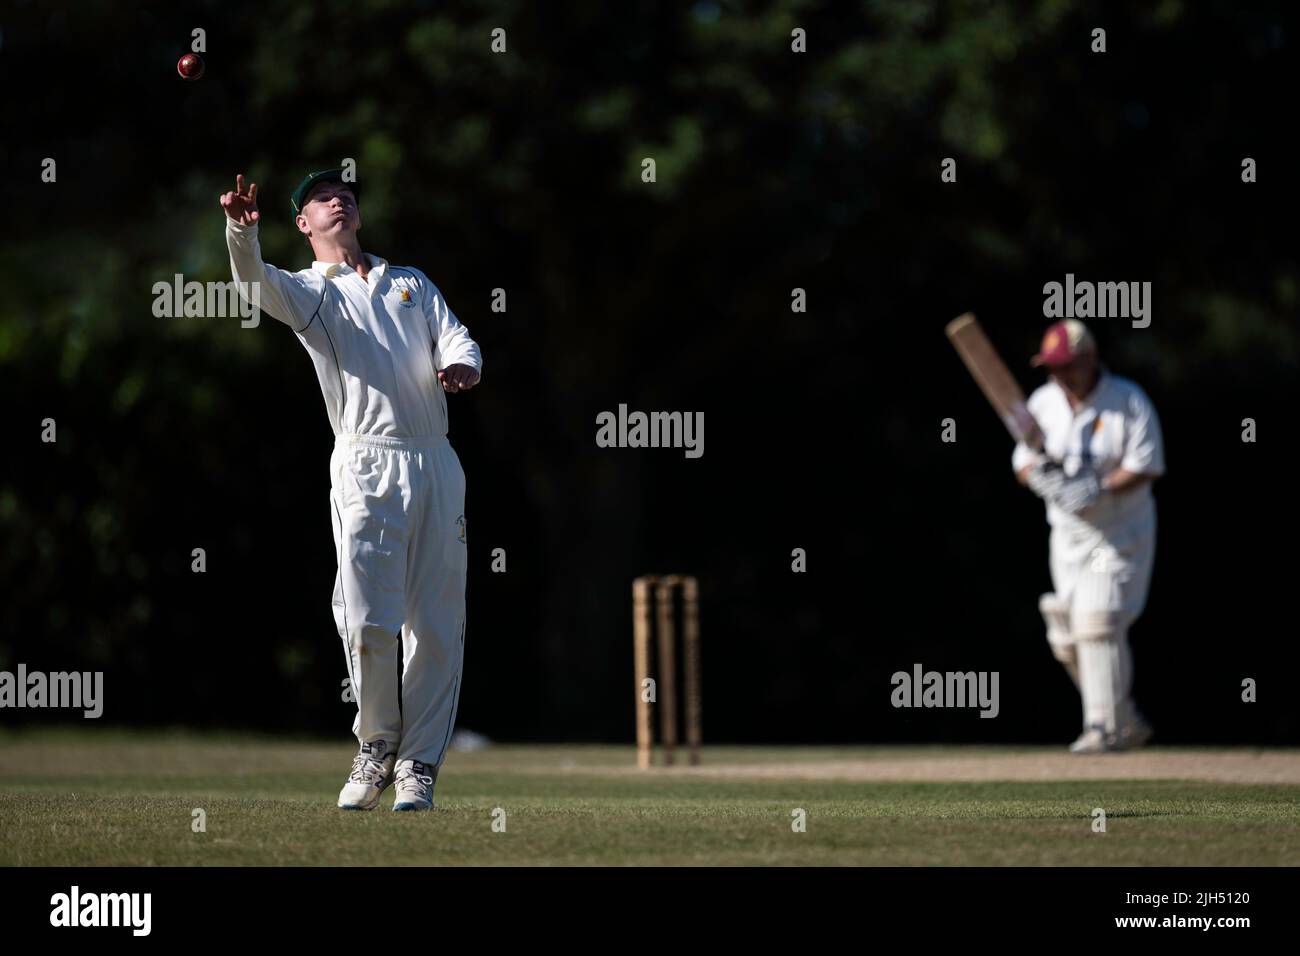 Cricket-Feldspieler wirft Cricket-Ball Stockfoto